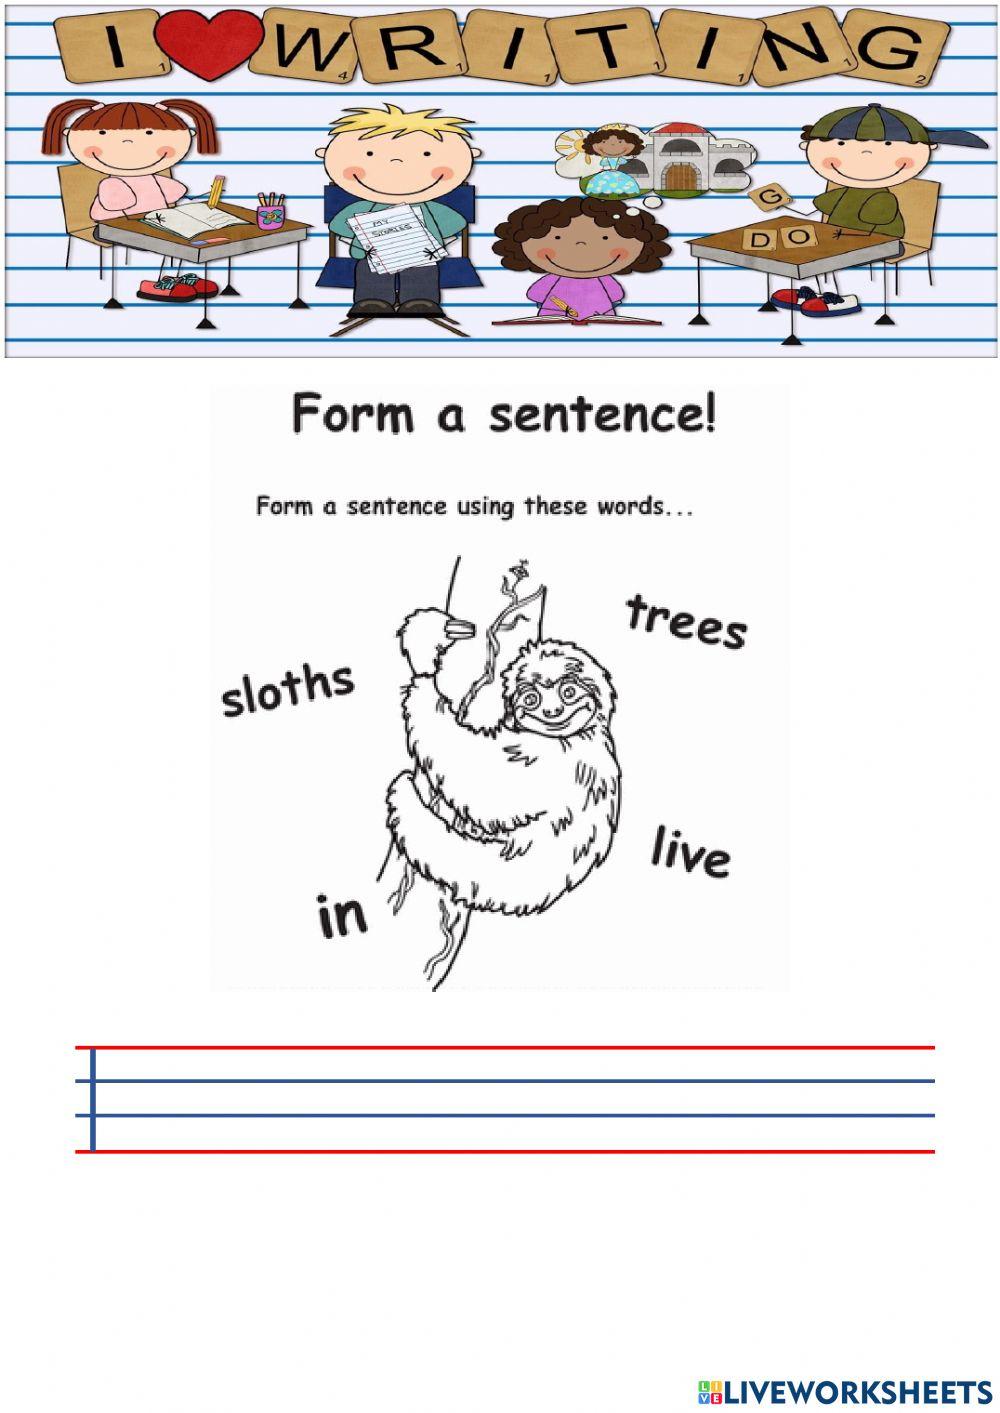 Forming sentences